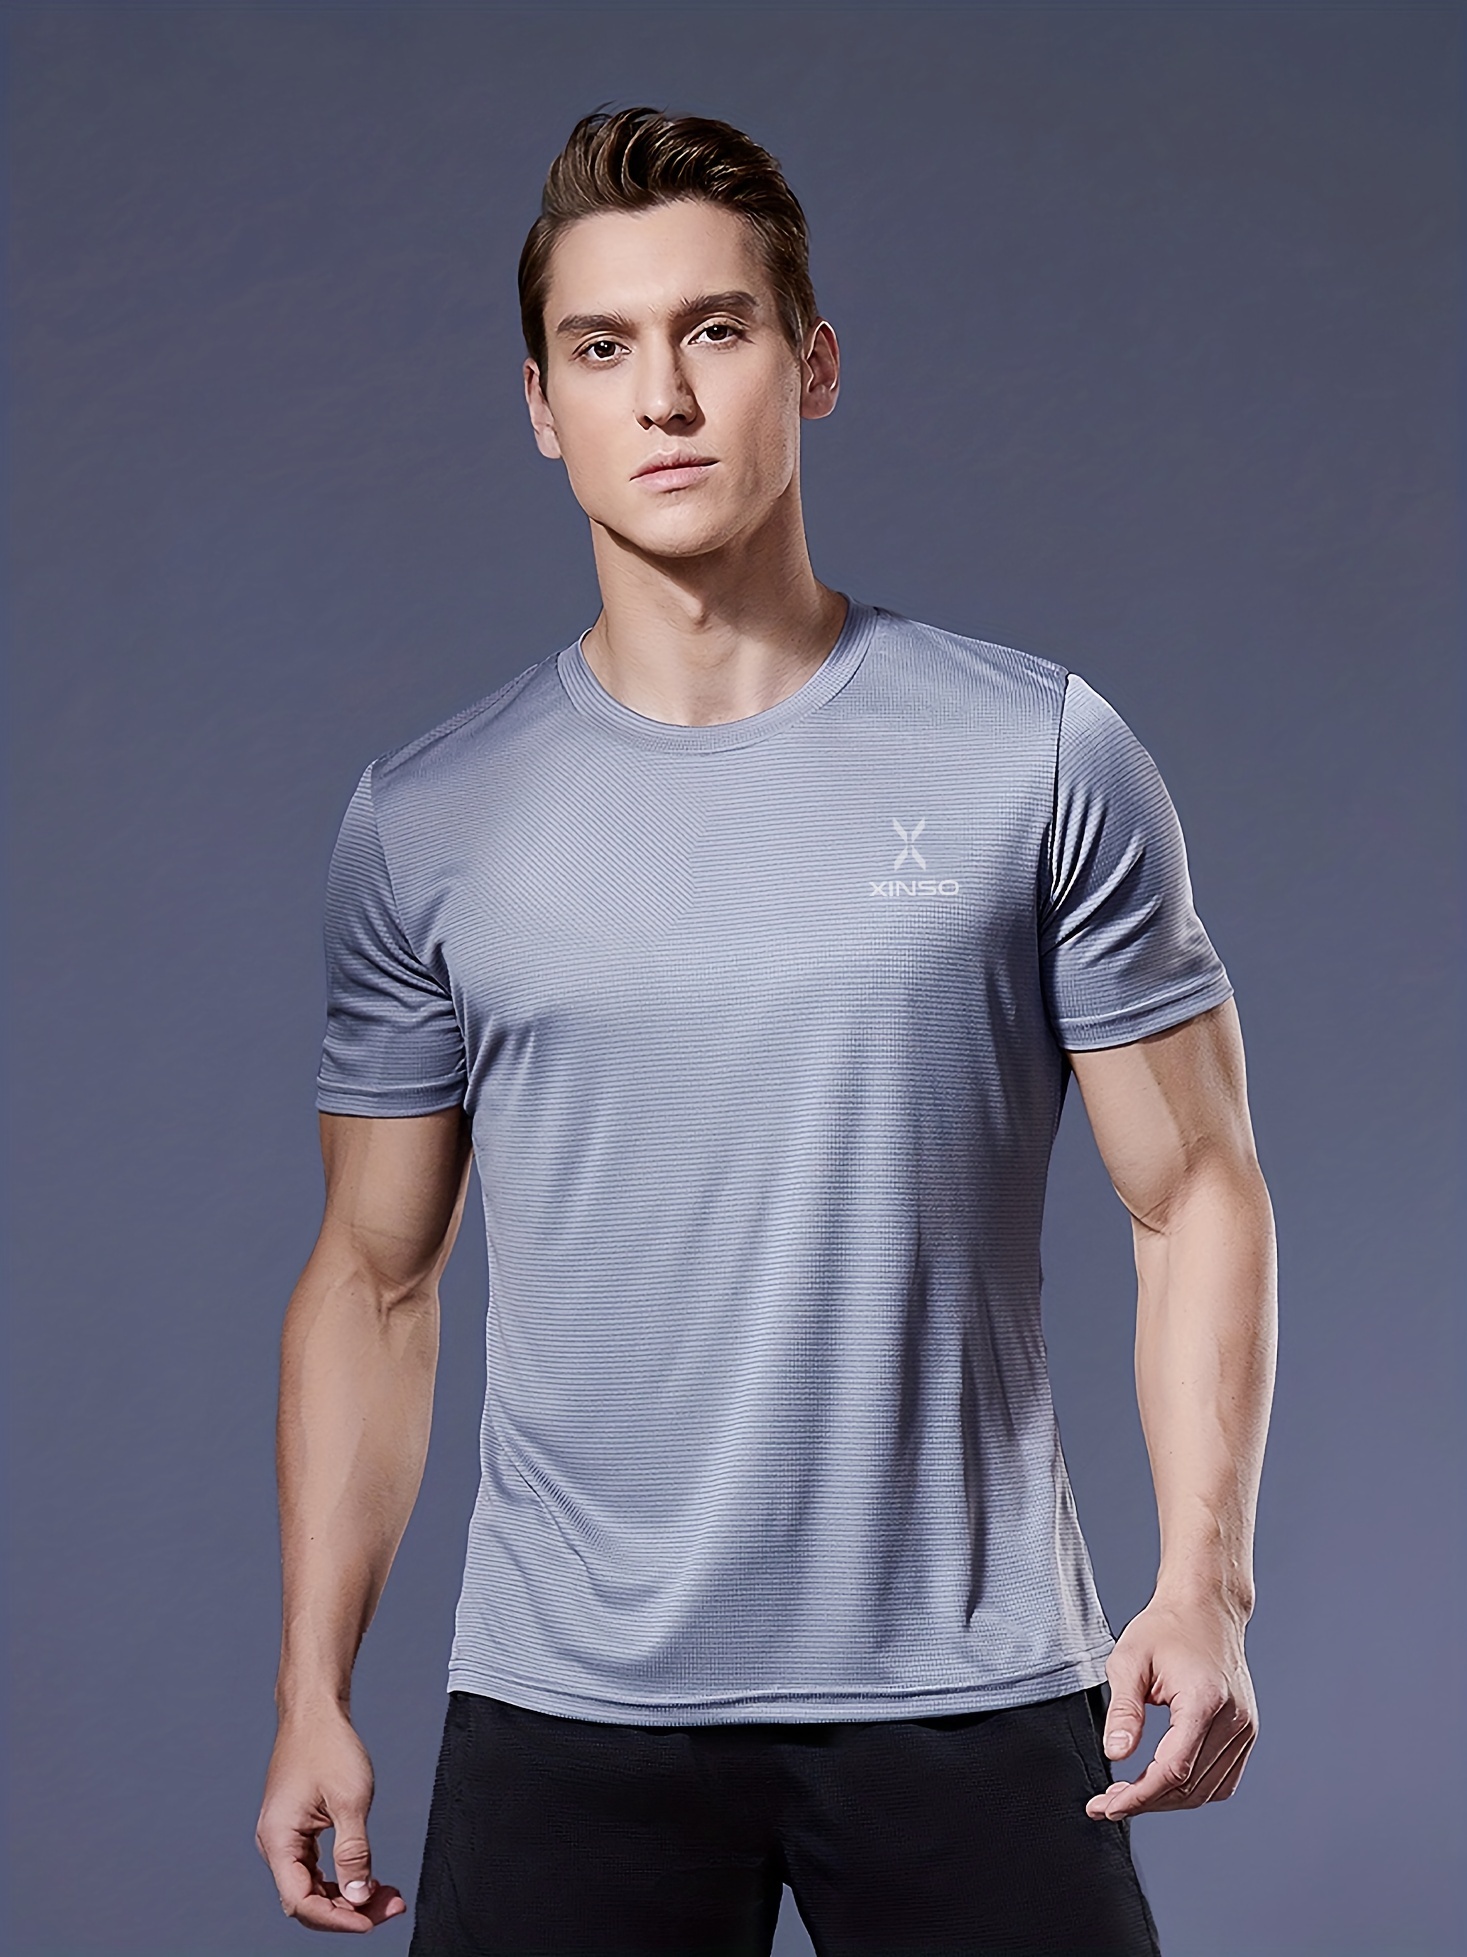 Fitness quick-drying sports shirt, Uniqistic.com